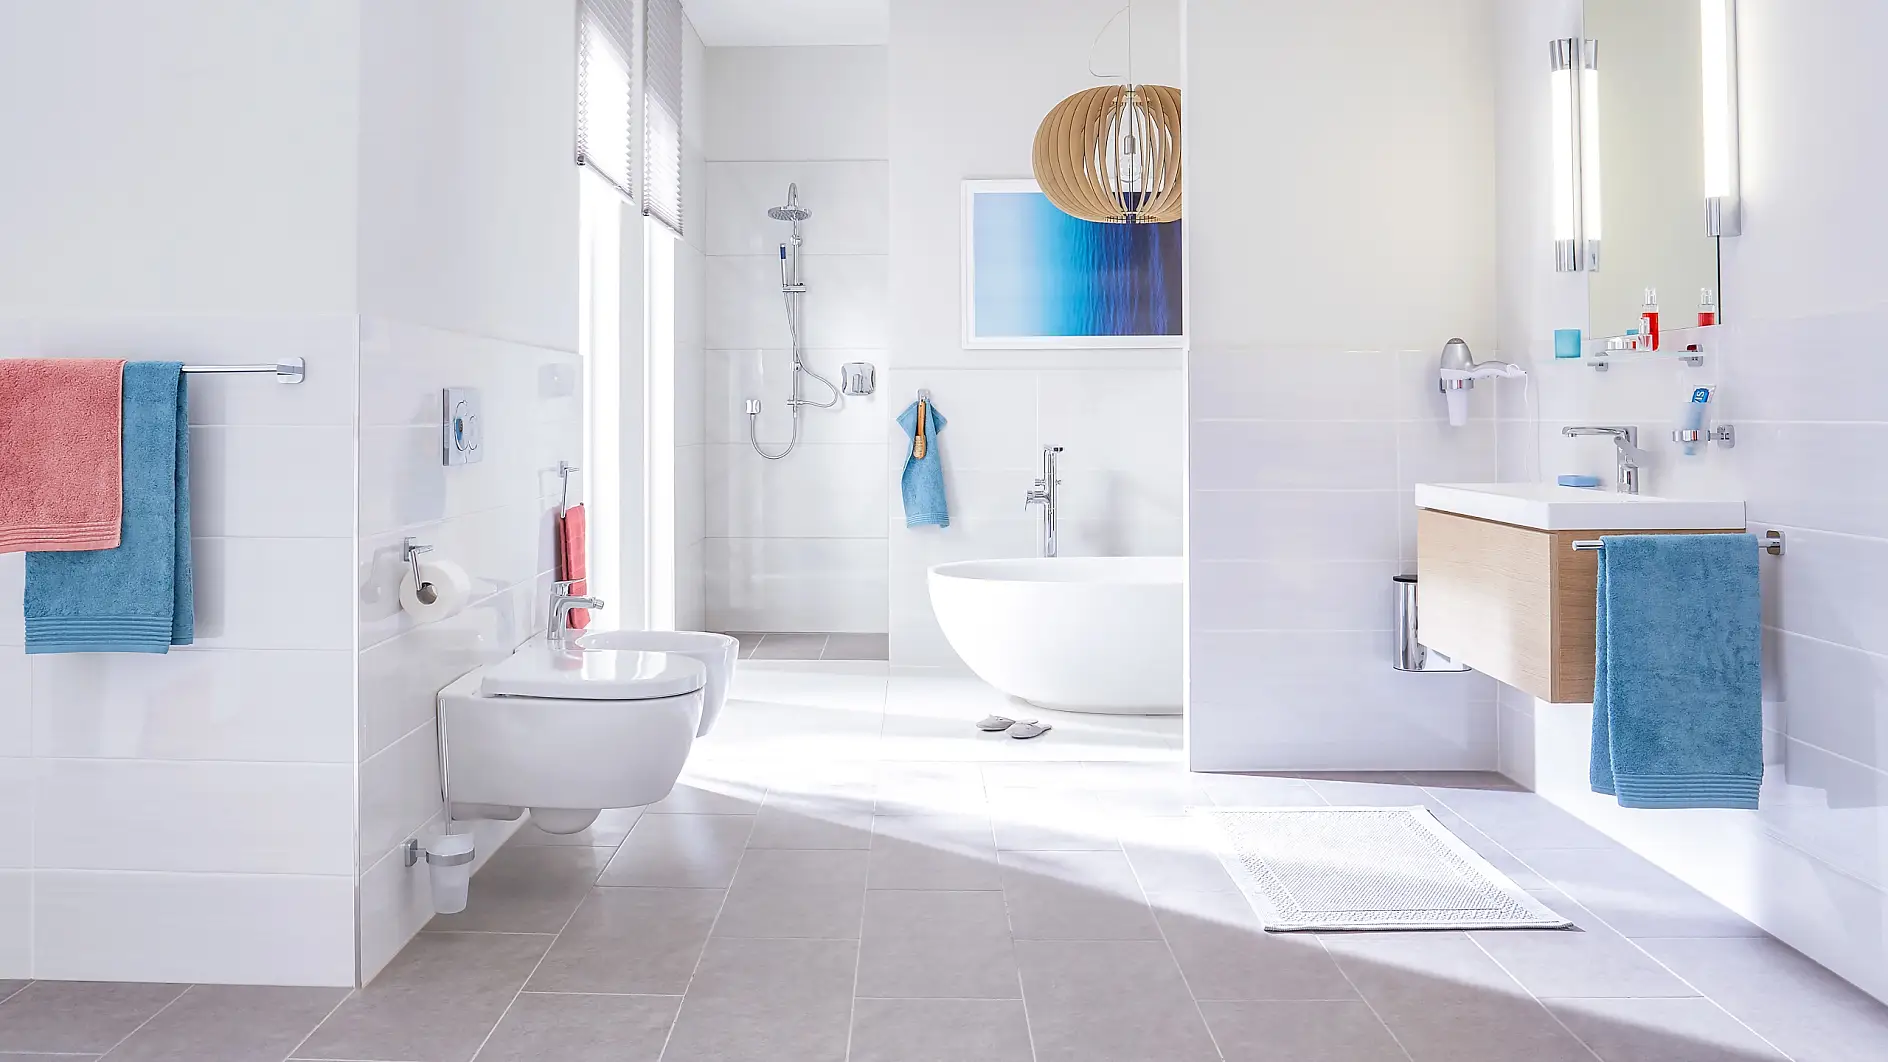 Design meets perfect elegance for luxury bathrooms.